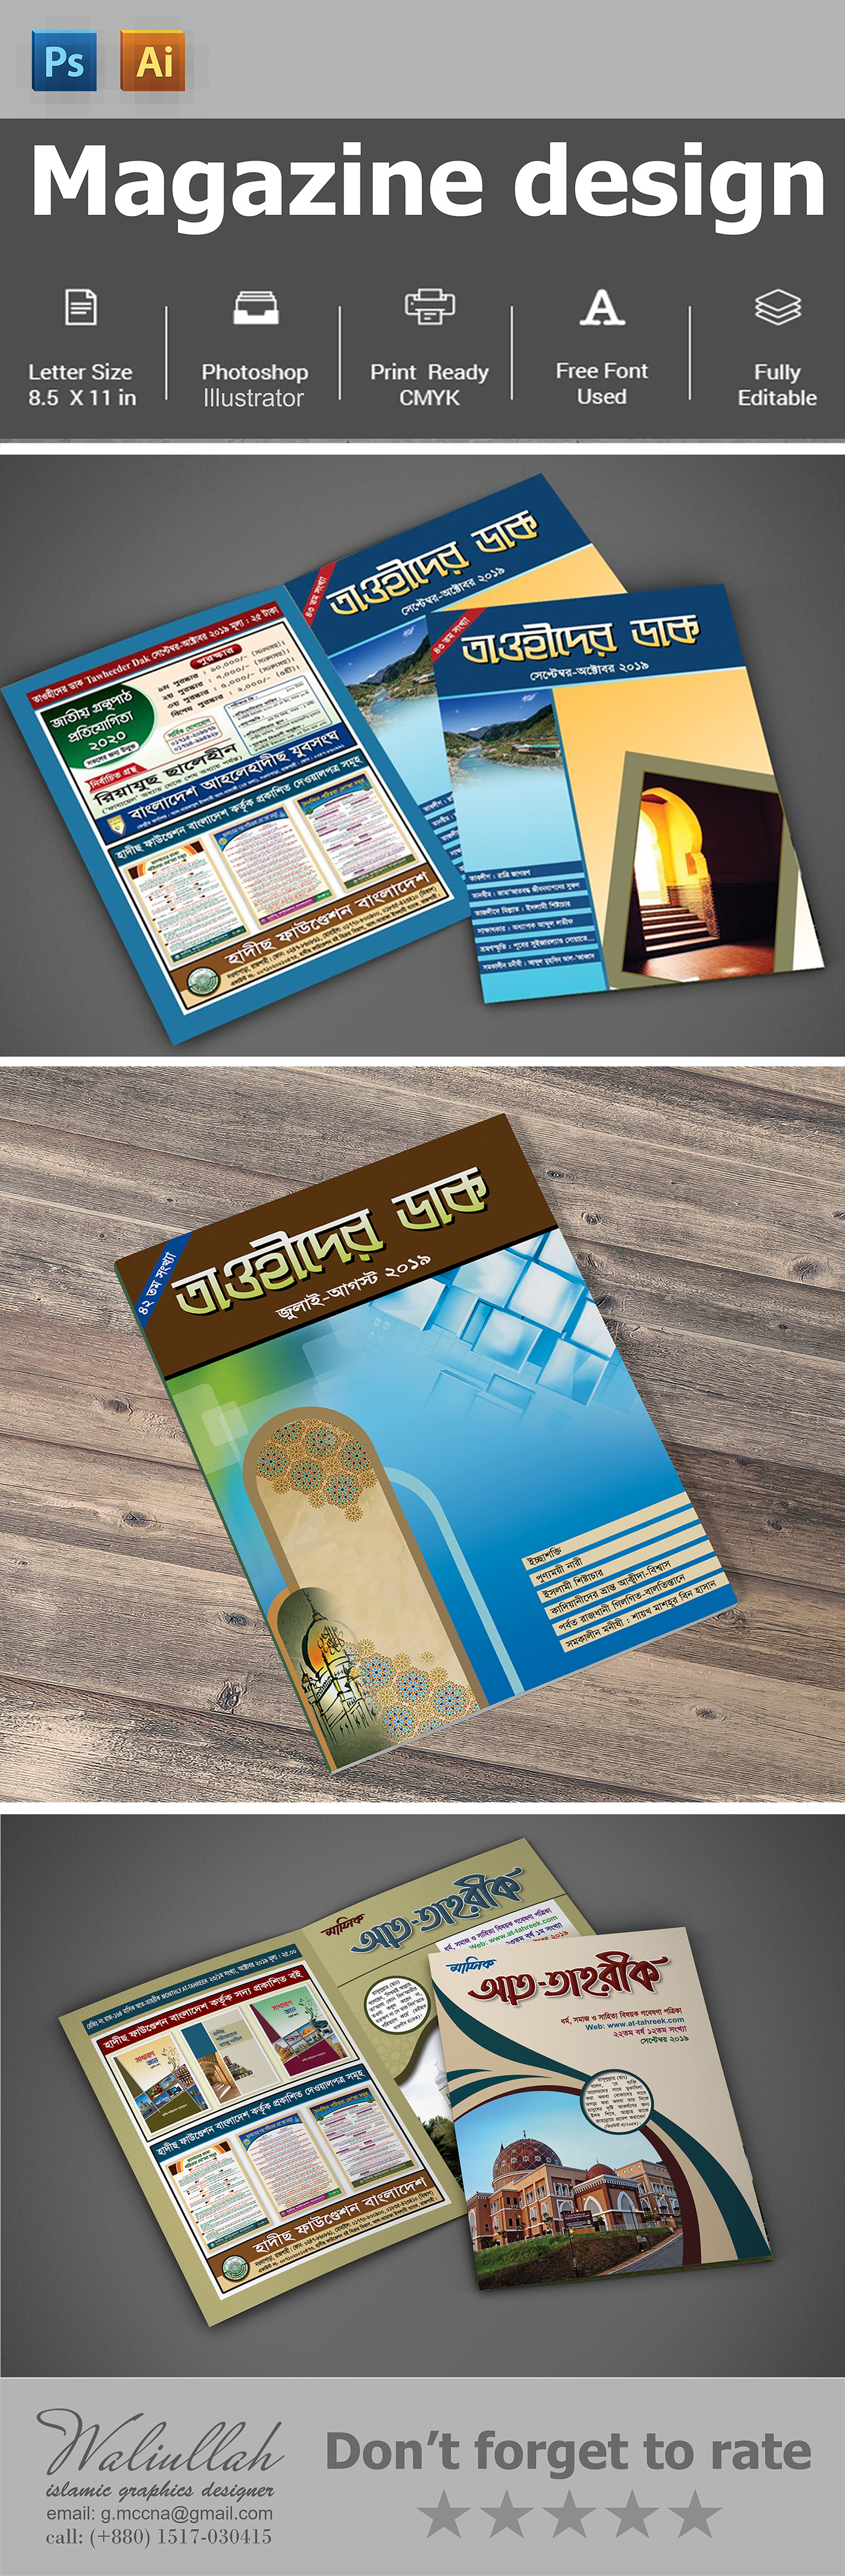 islamic cover design religious card magazin call of Tawheed taohid tawhid